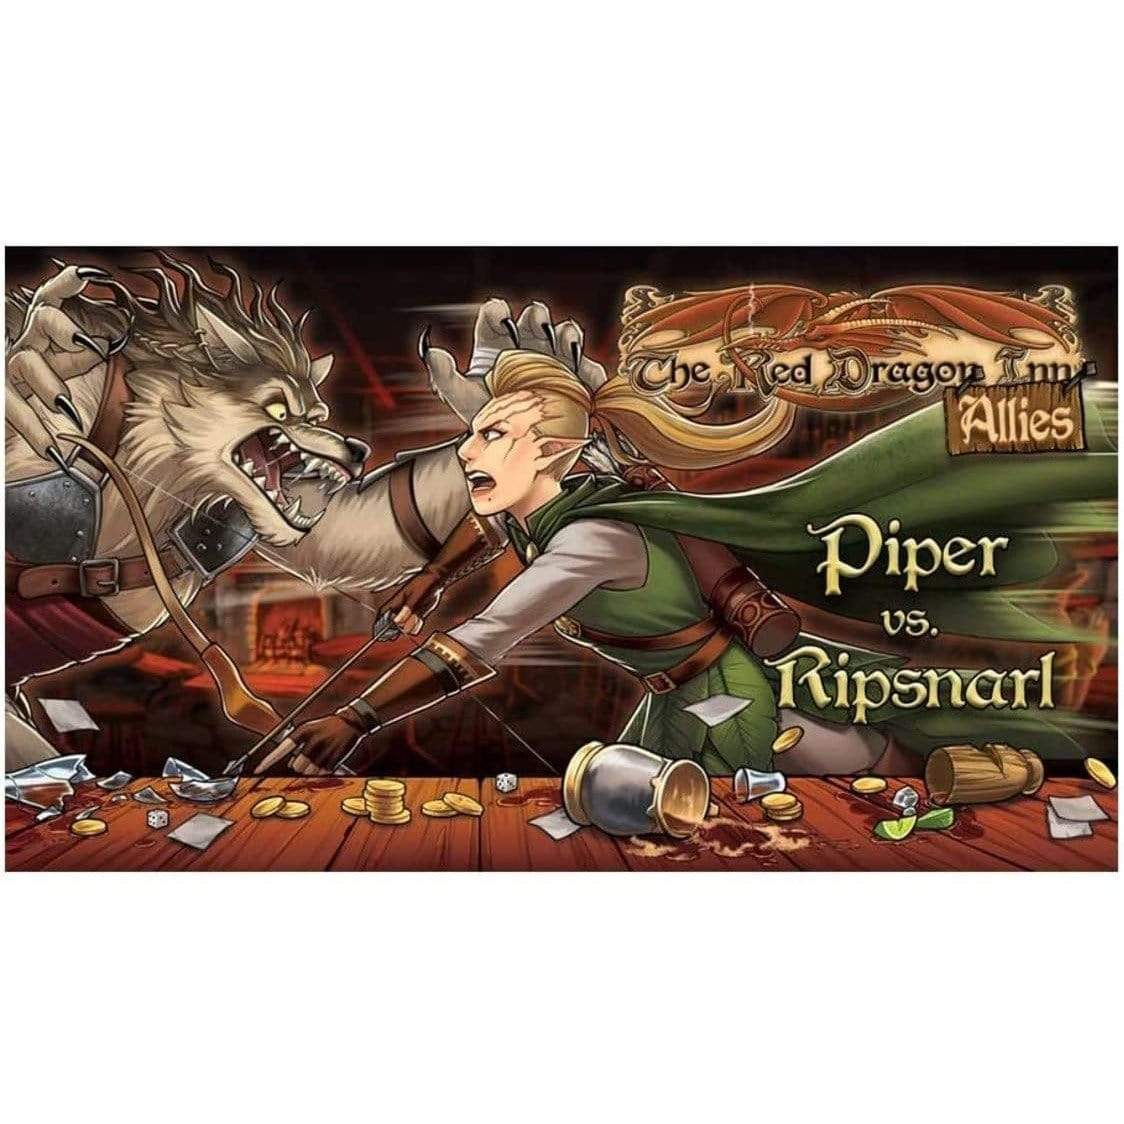 Red Dragon Inn: Allies: Piper vs Ripsnarl Alliance Games Board Games